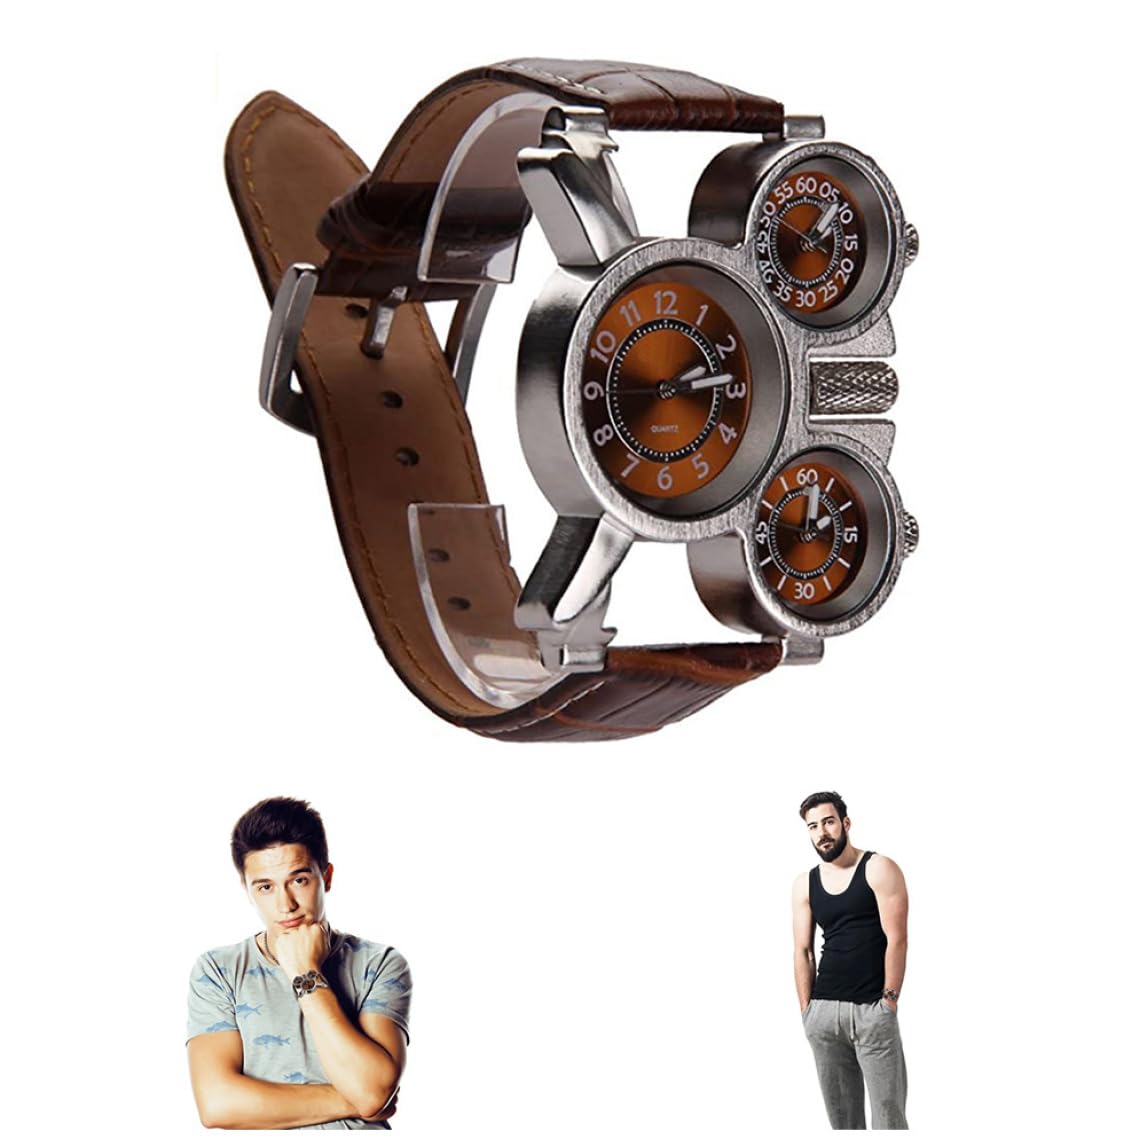 XJKLBYQ Mens Big Face Watch, Time Zone Leather Strap Sport Watch, 3 Analog Quartz Wrist Watch Leather Strap Watch Brown